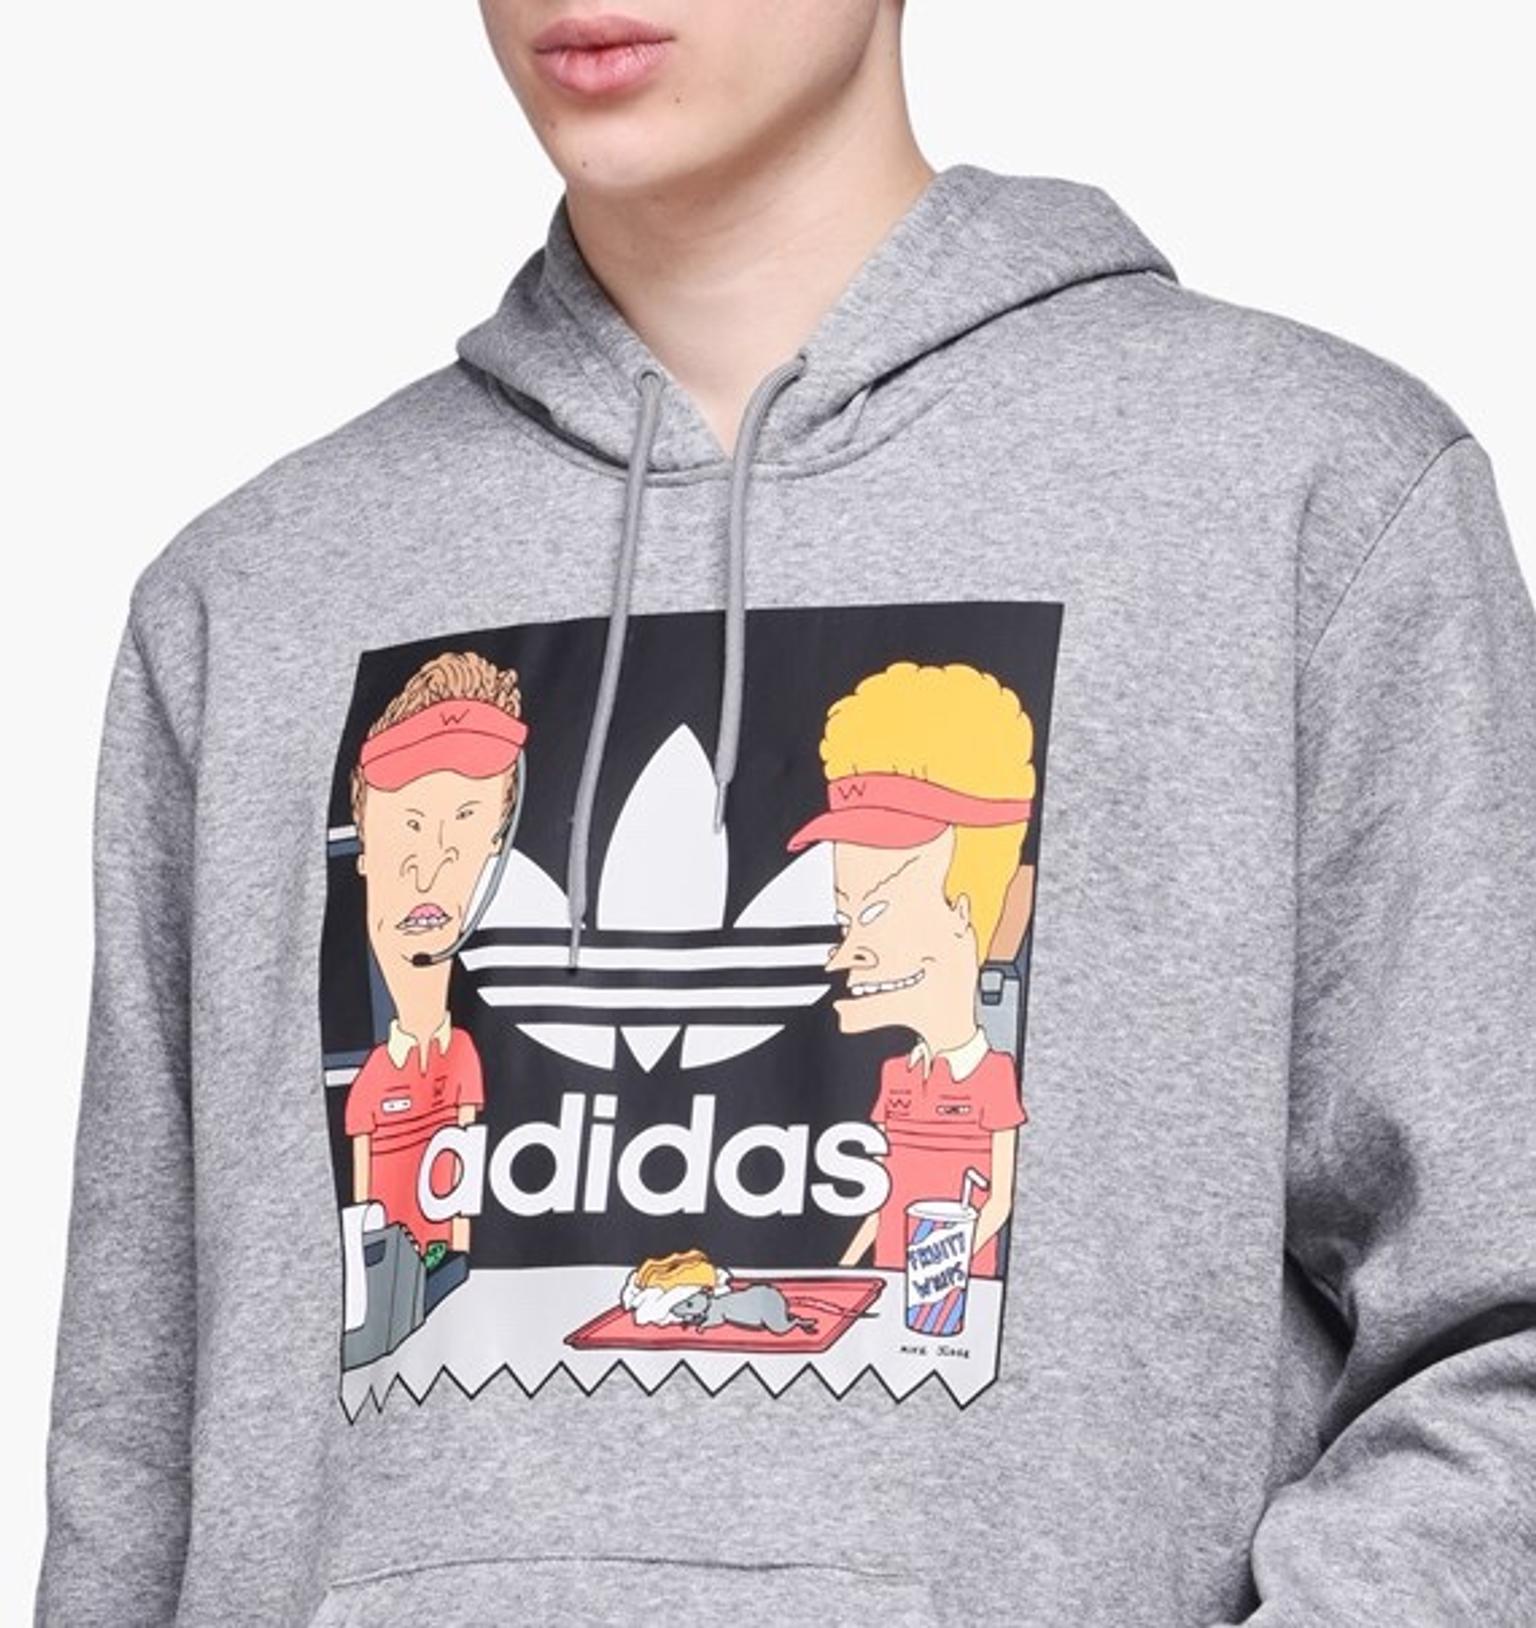 adidas x beavis and butthead hoodie